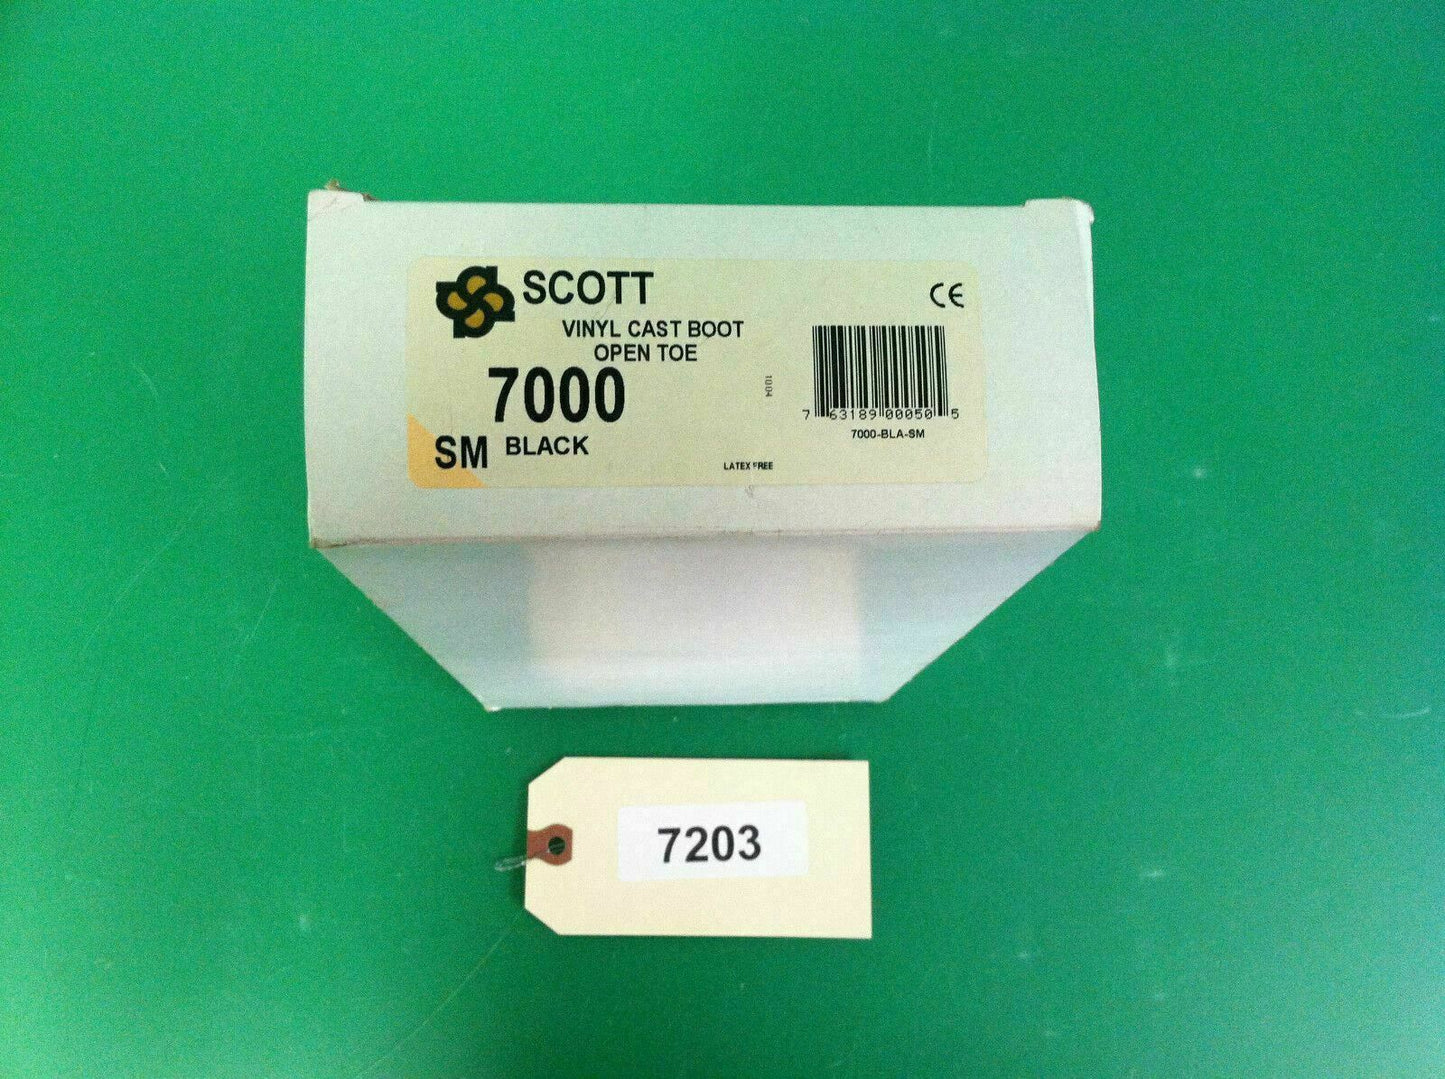 Scott Vinyl Cast Boot Open Toe Black (Small)(7000) #7203